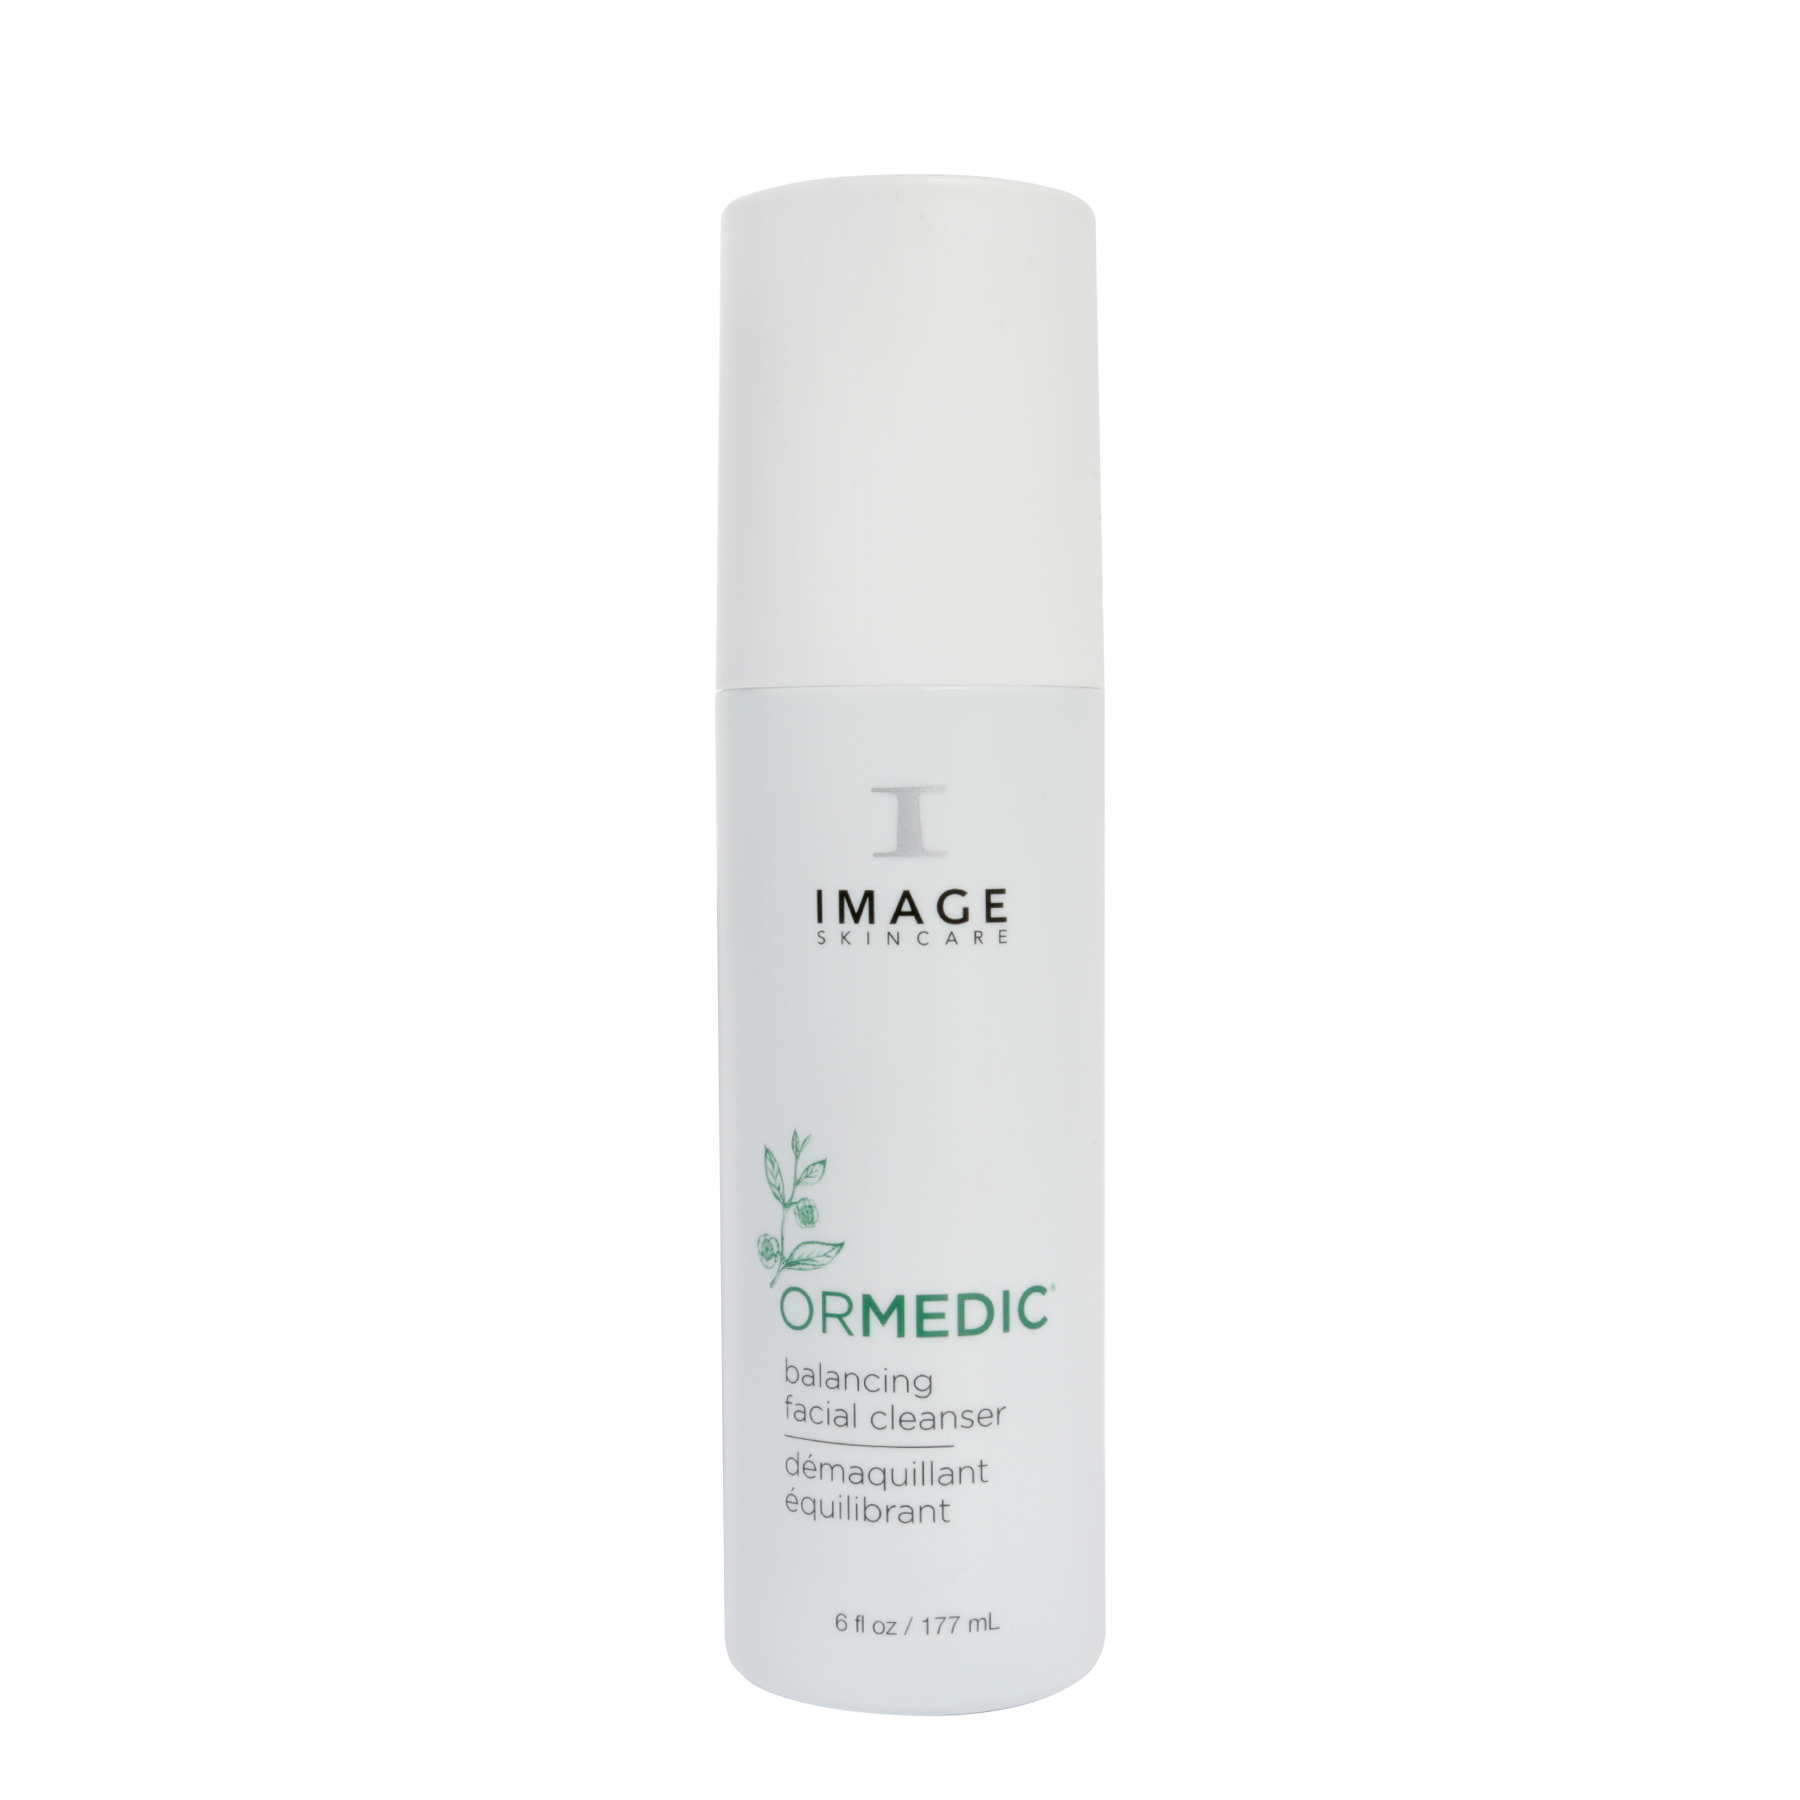 ORMEDIC | Balancing Facial Cleanser